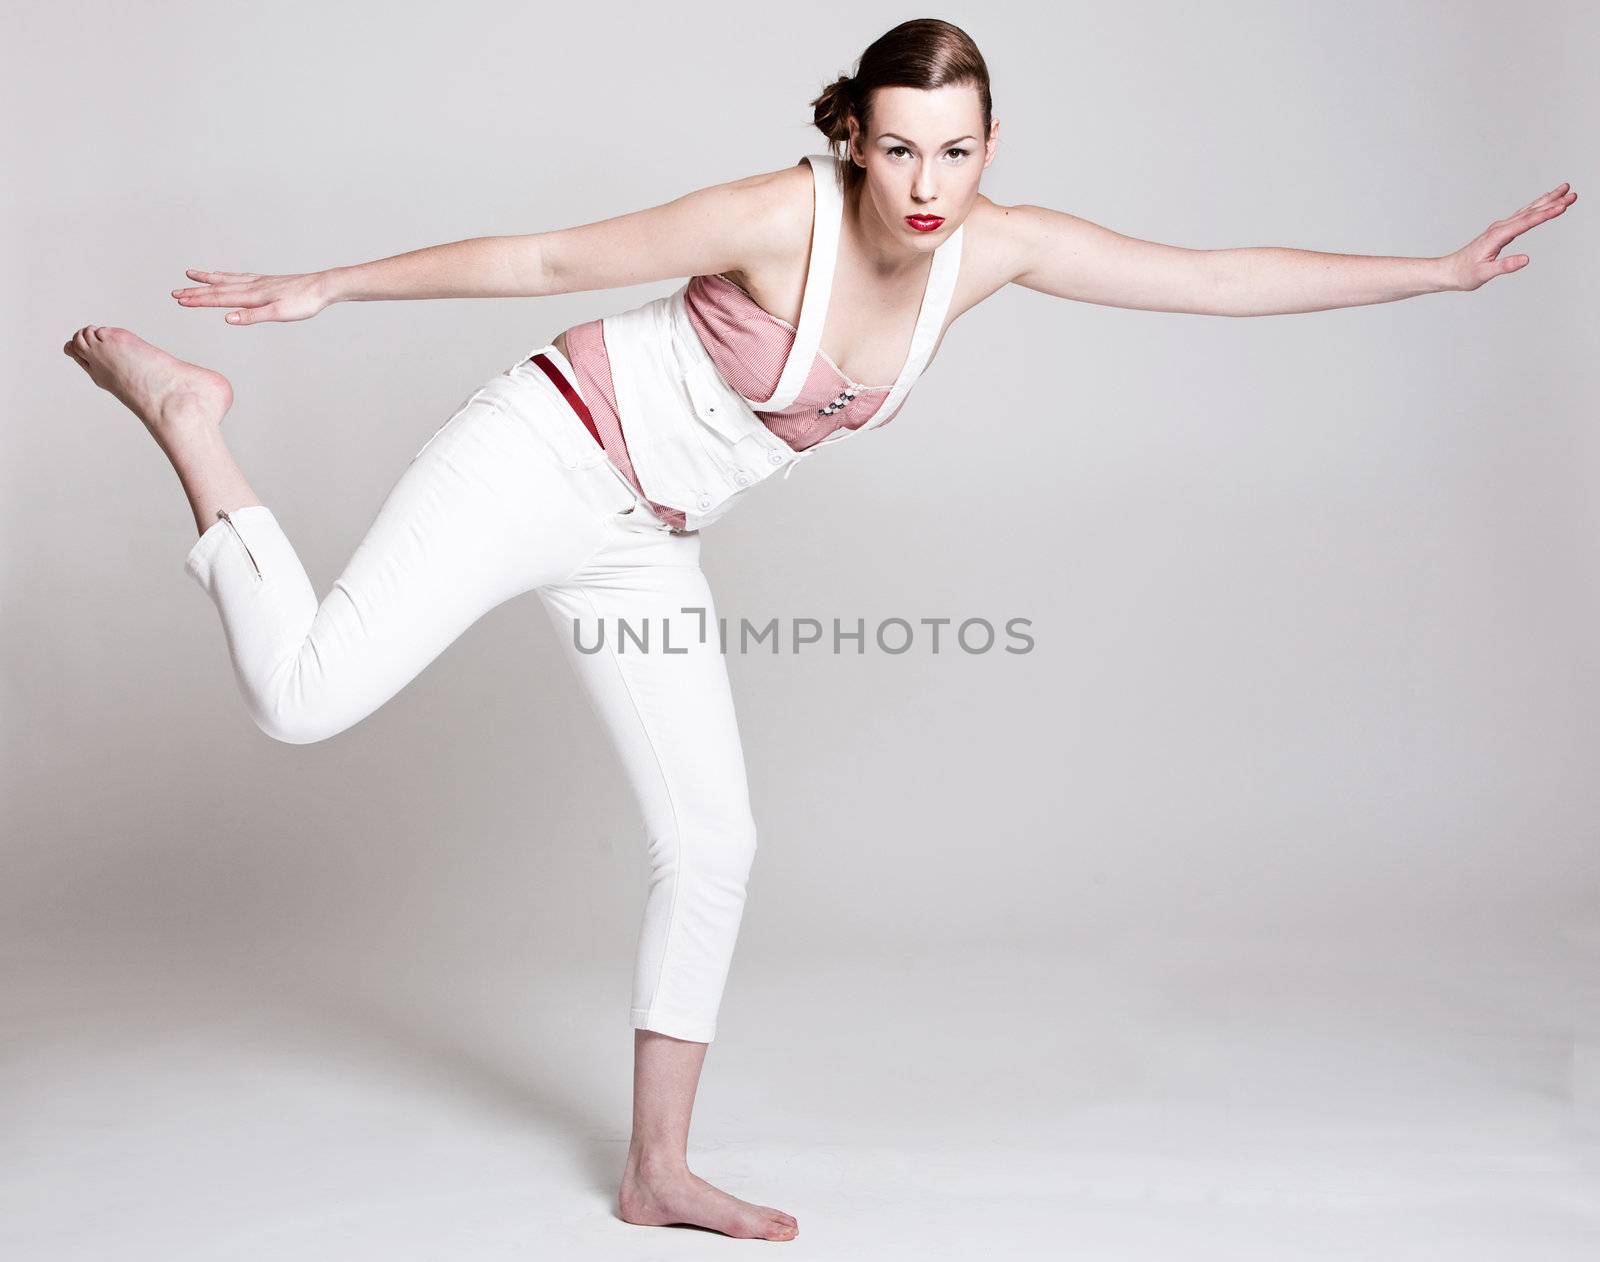 Balancing act by Fotosmurf